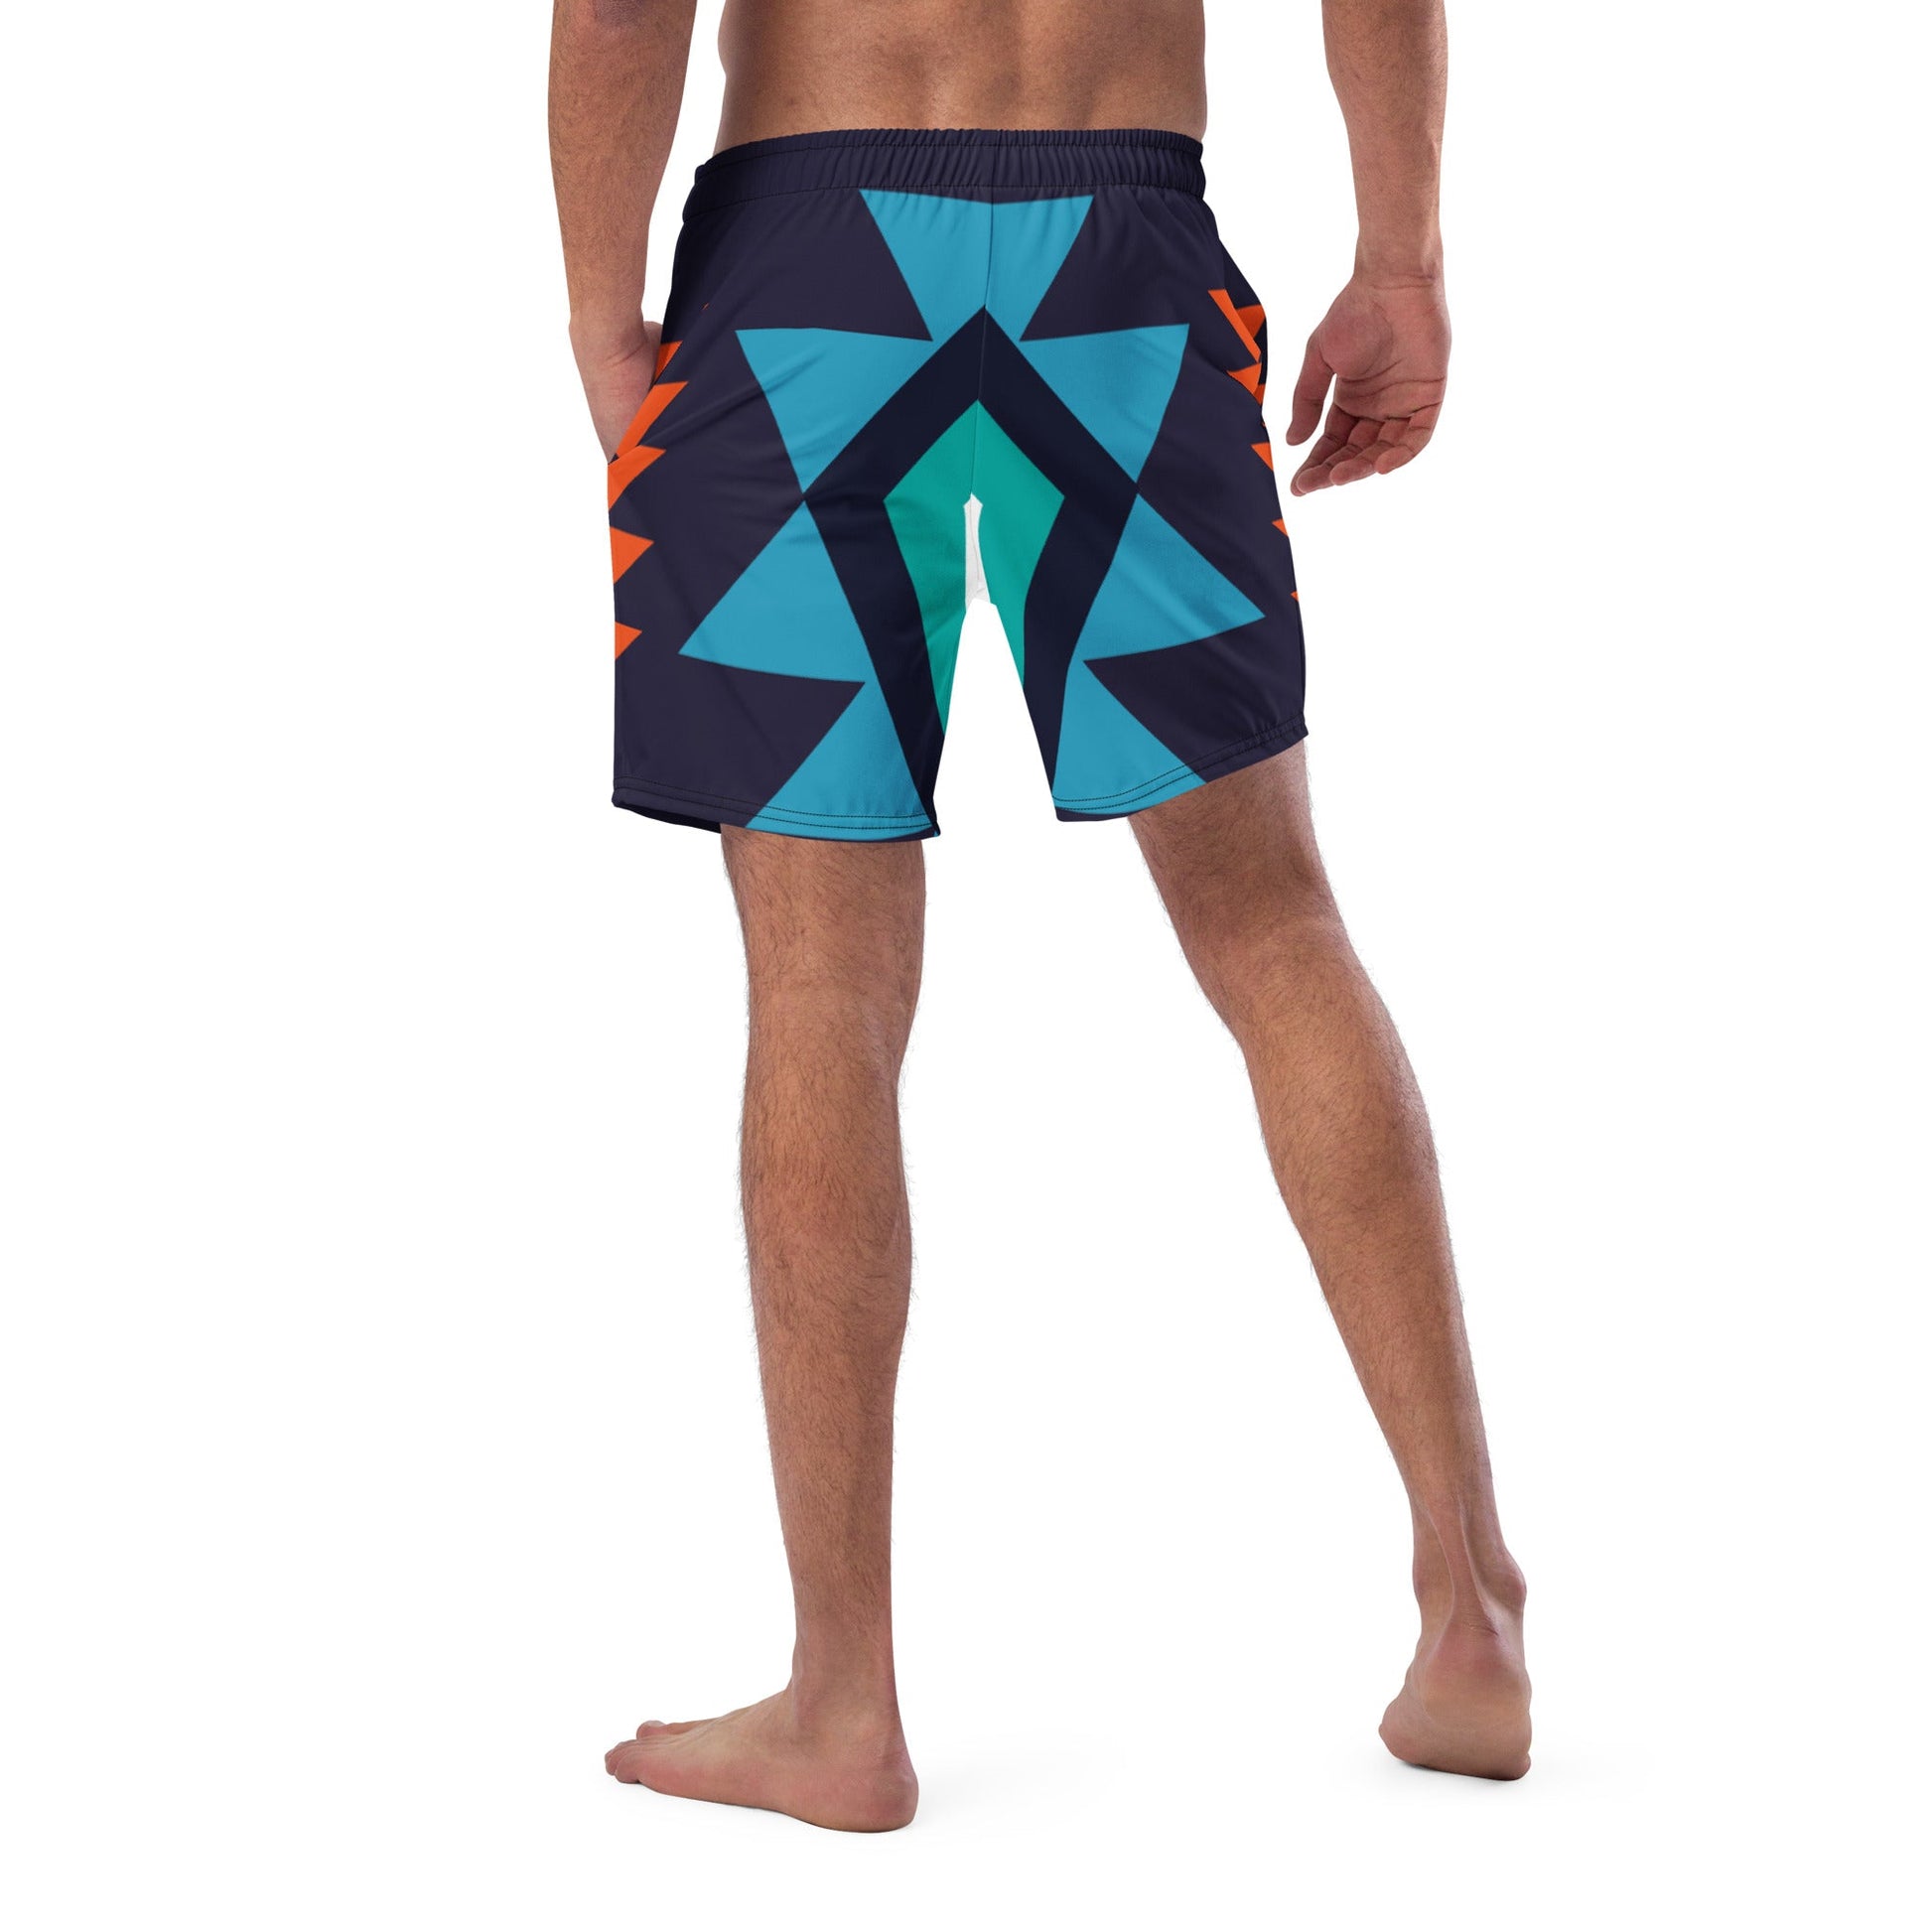 Men's swim trunks Native Recycled Material - Nikikw Designs